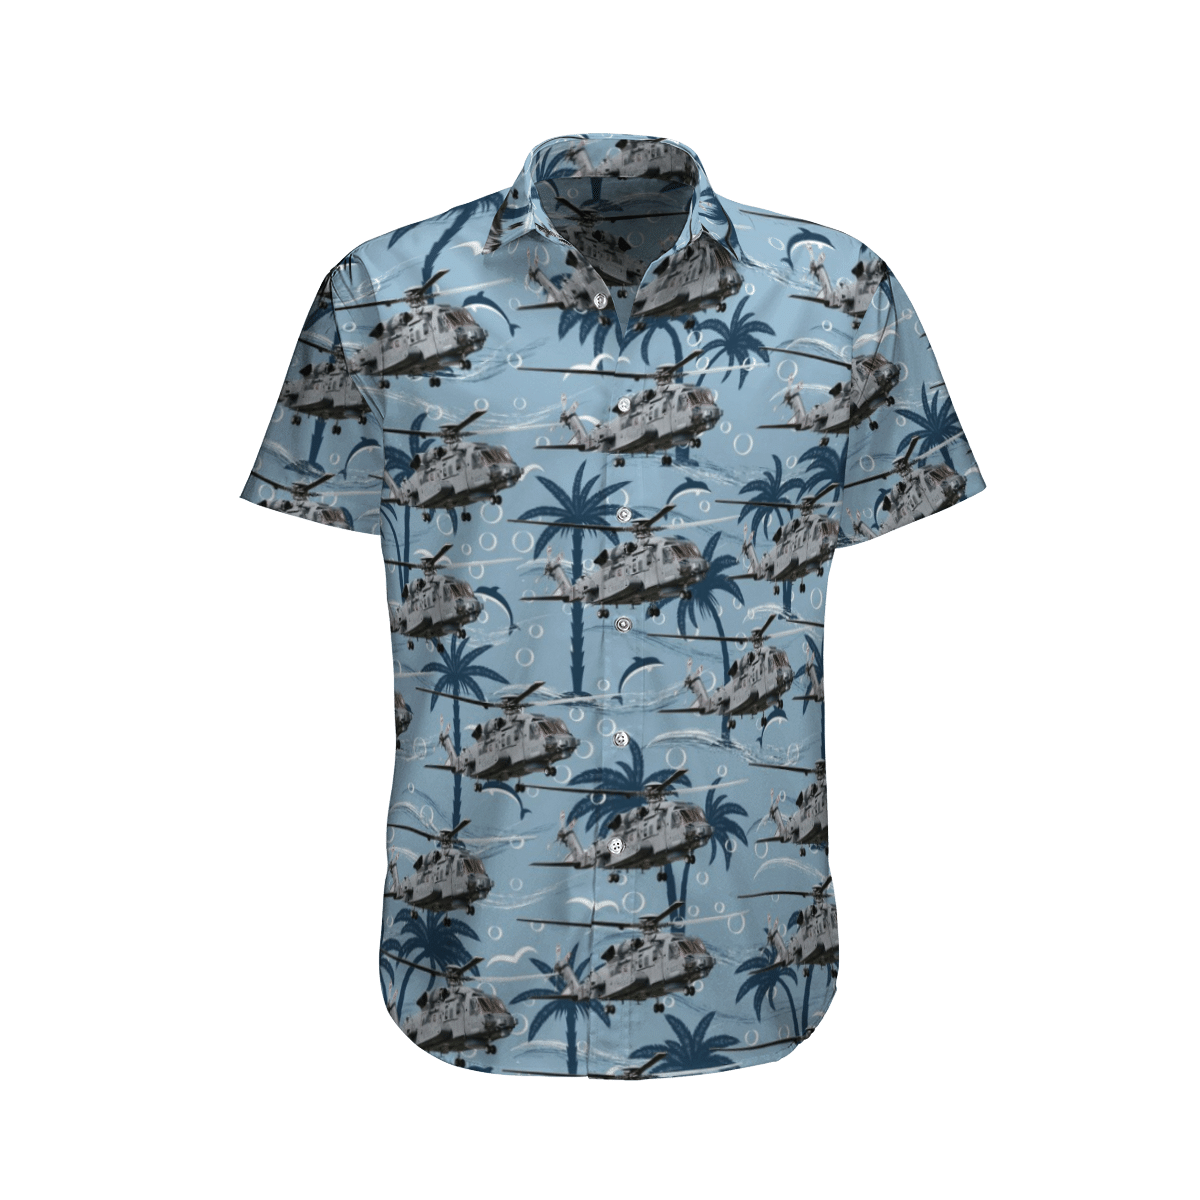 Enjoy your summer with top cool hawaiian shirt below 38